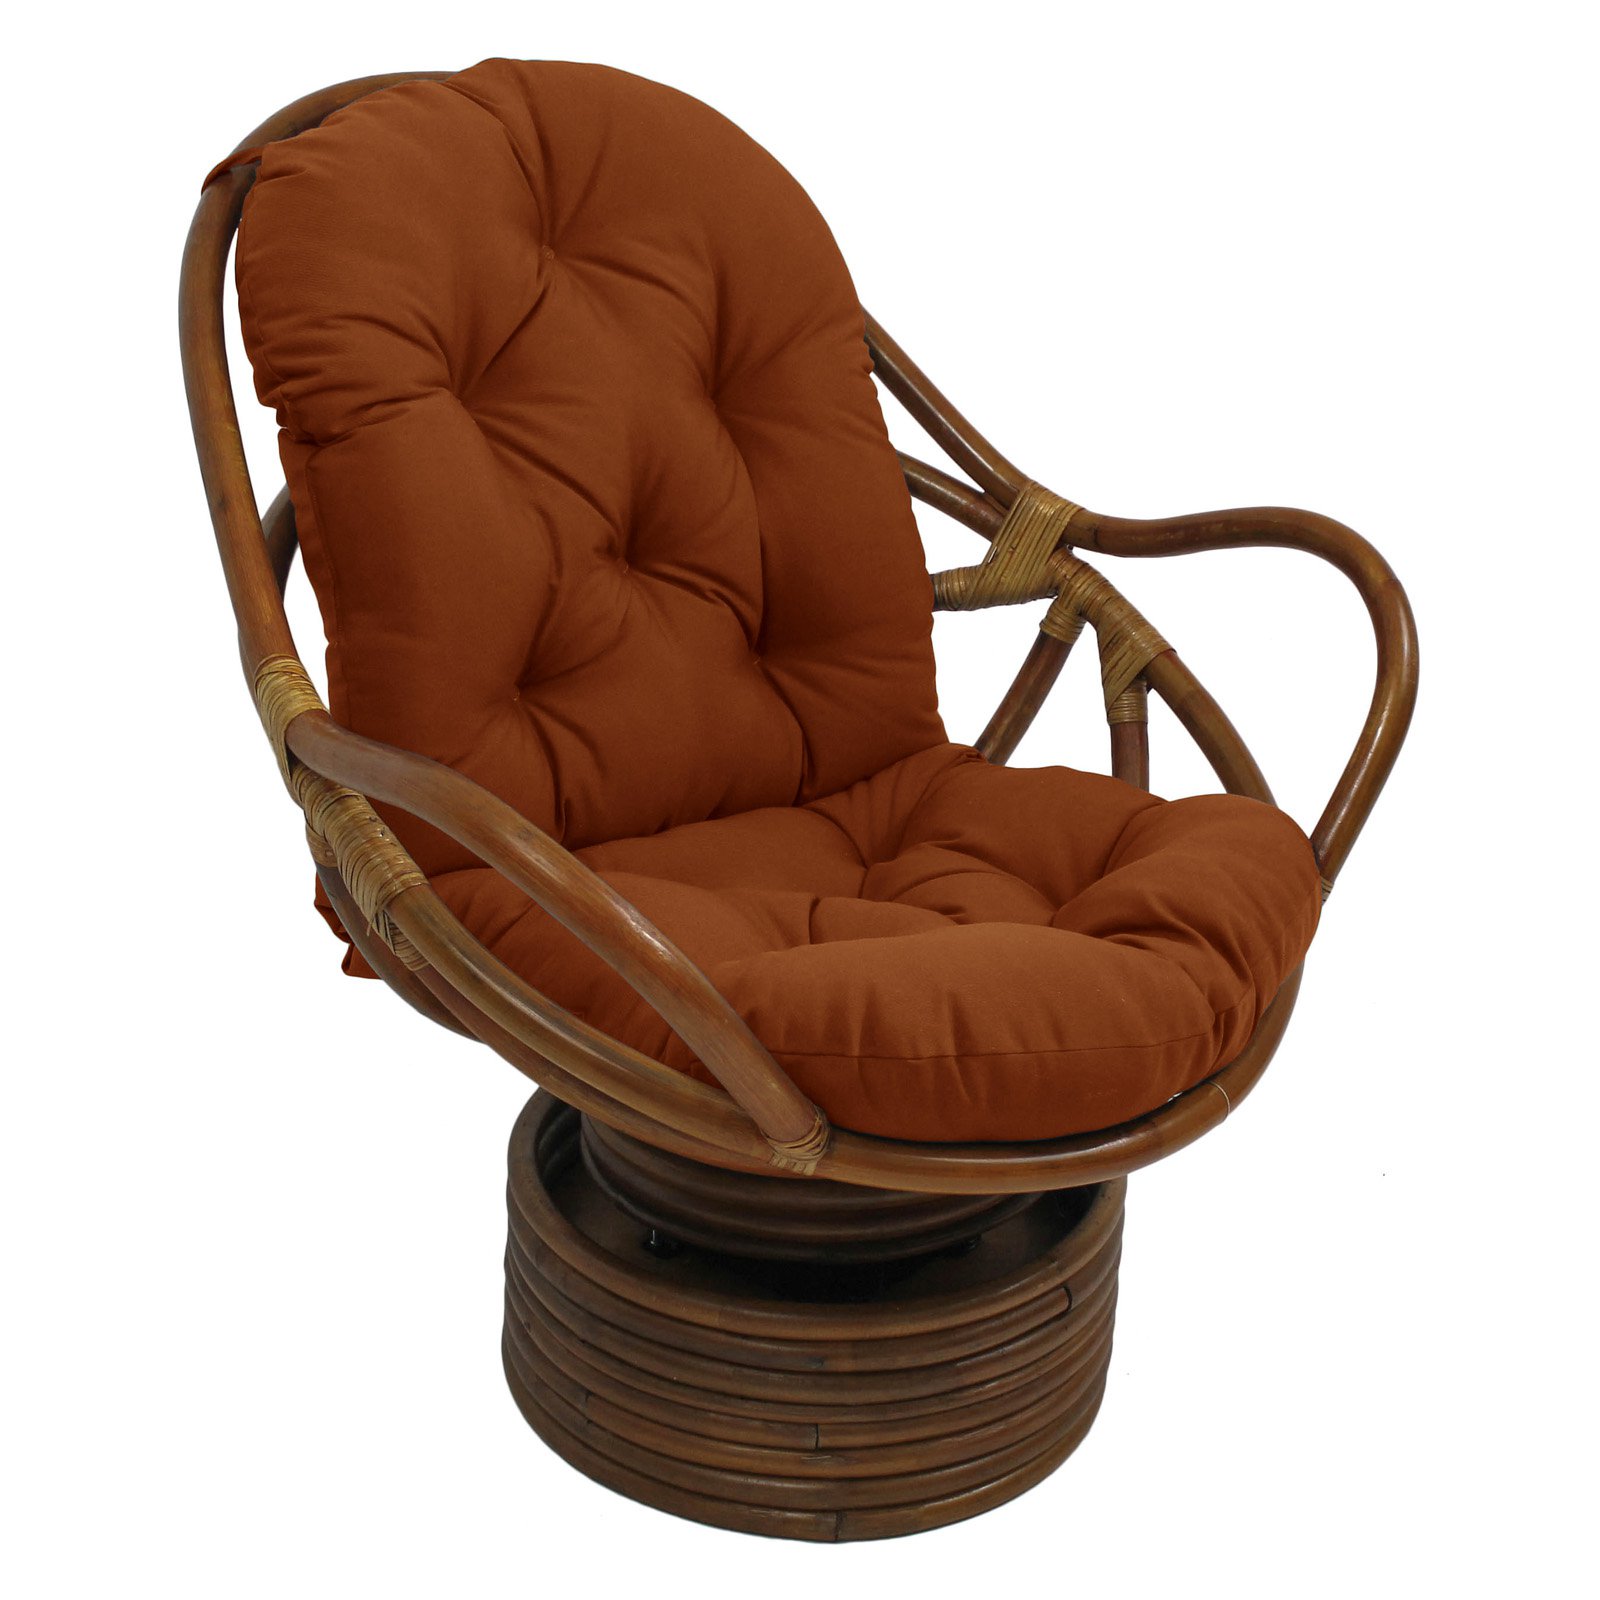 International Caravan Bali Rattan Swivel Rocker Chair with Cushion - image 1 of 5